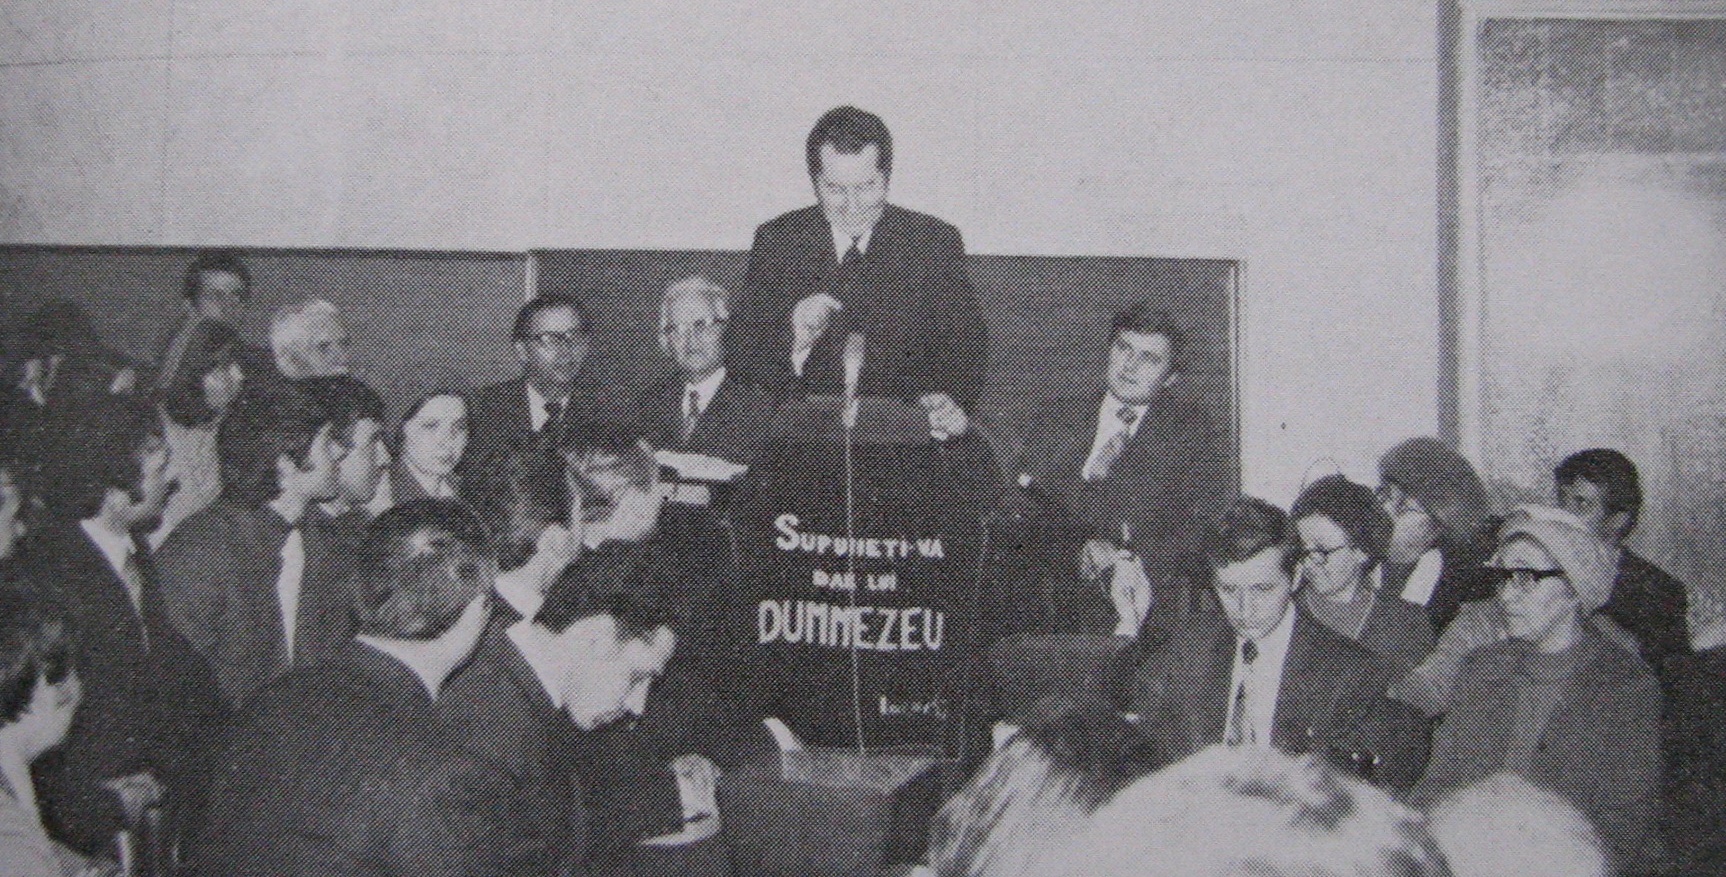 Iosif Țon during a preach in Bucharest in 1977